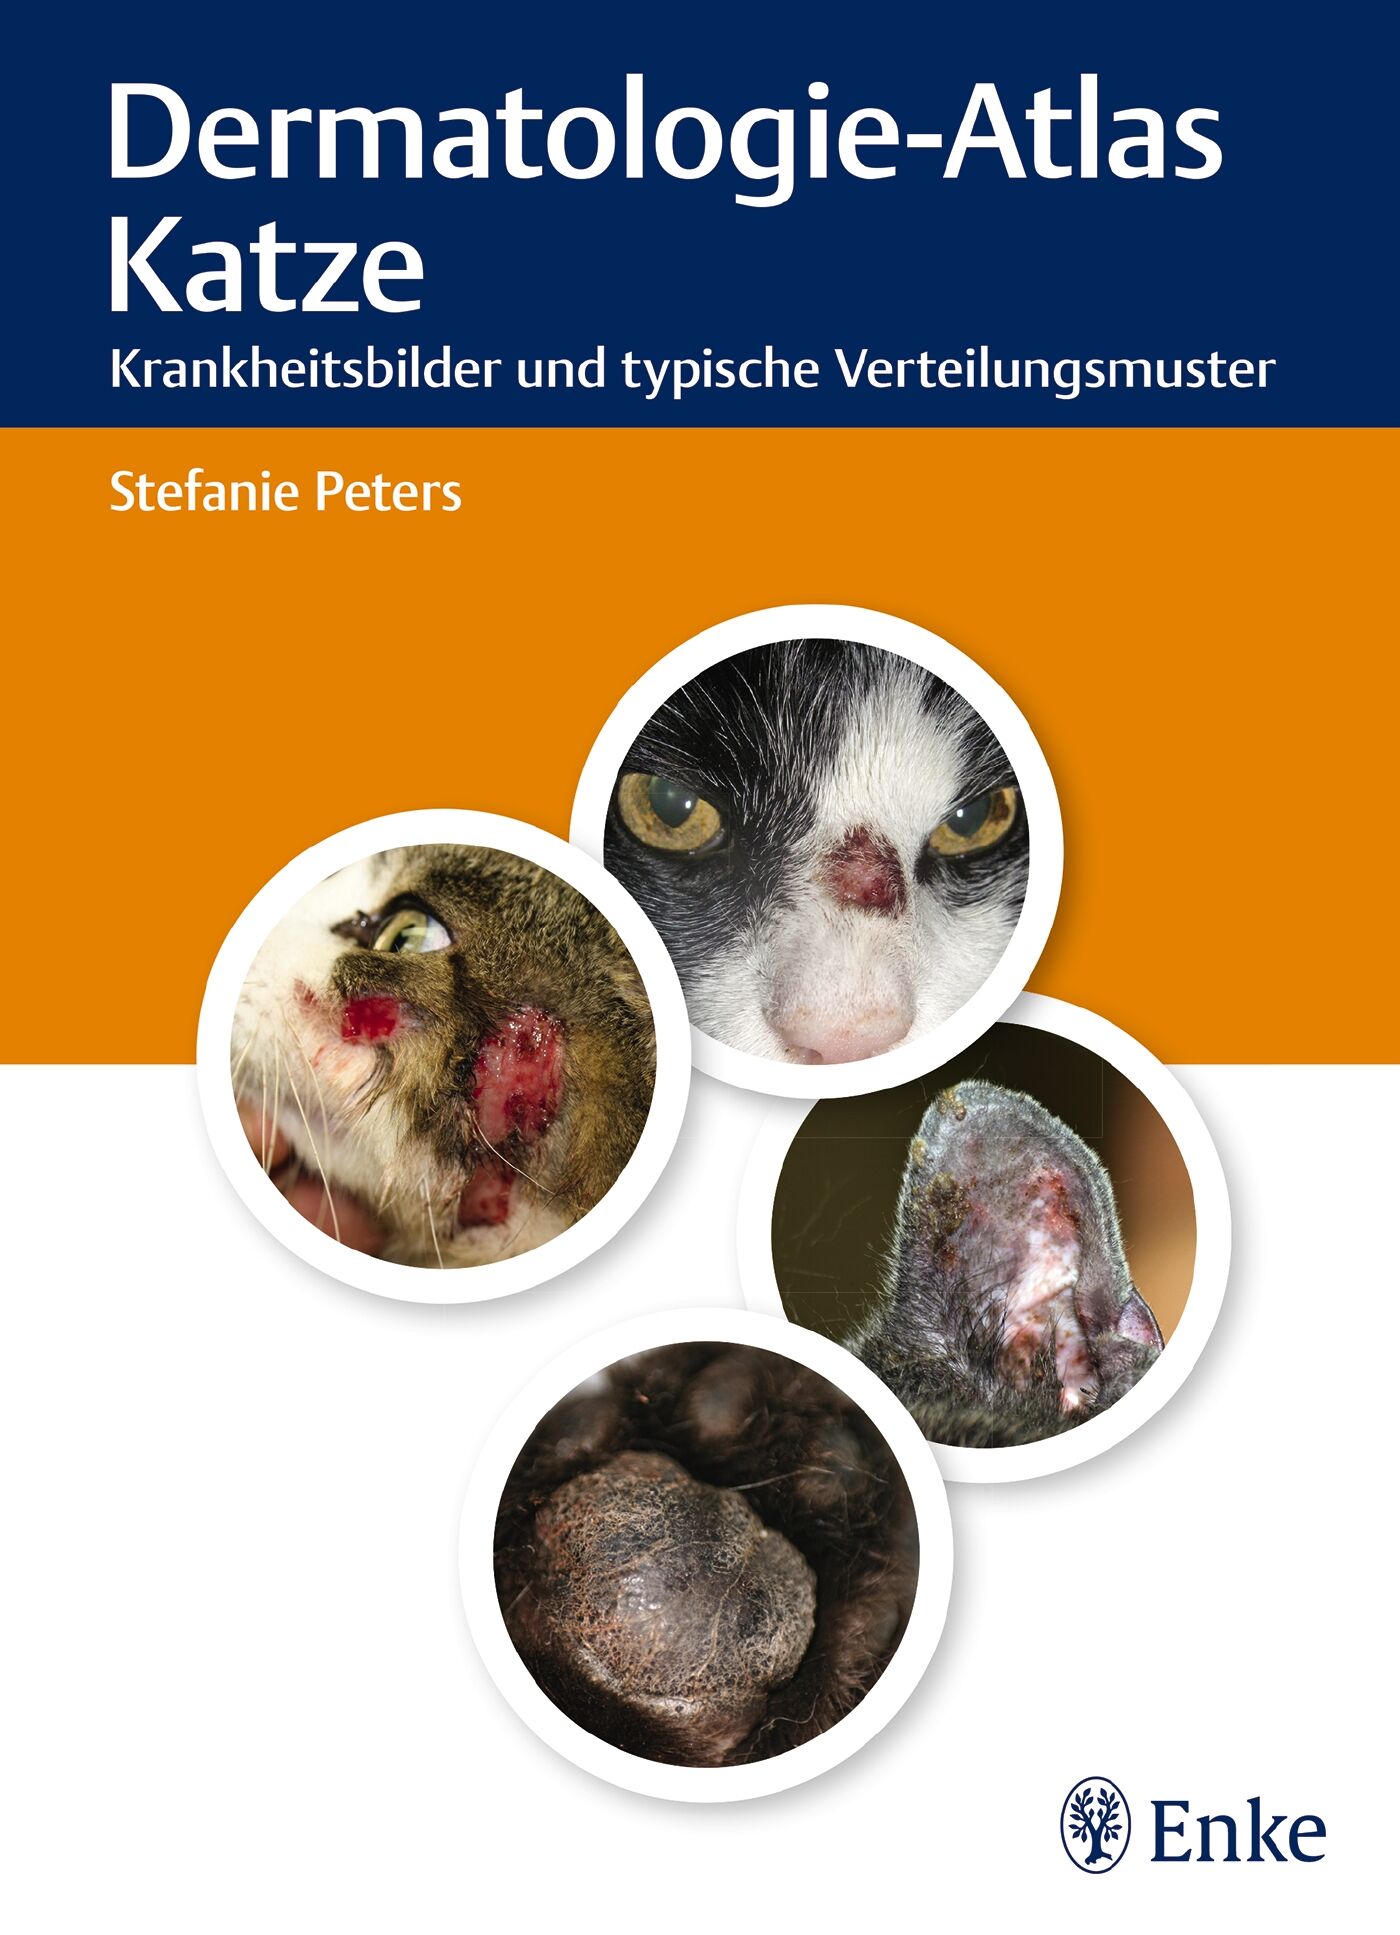 Dermatologie-Atlas Katze, 9783132194410